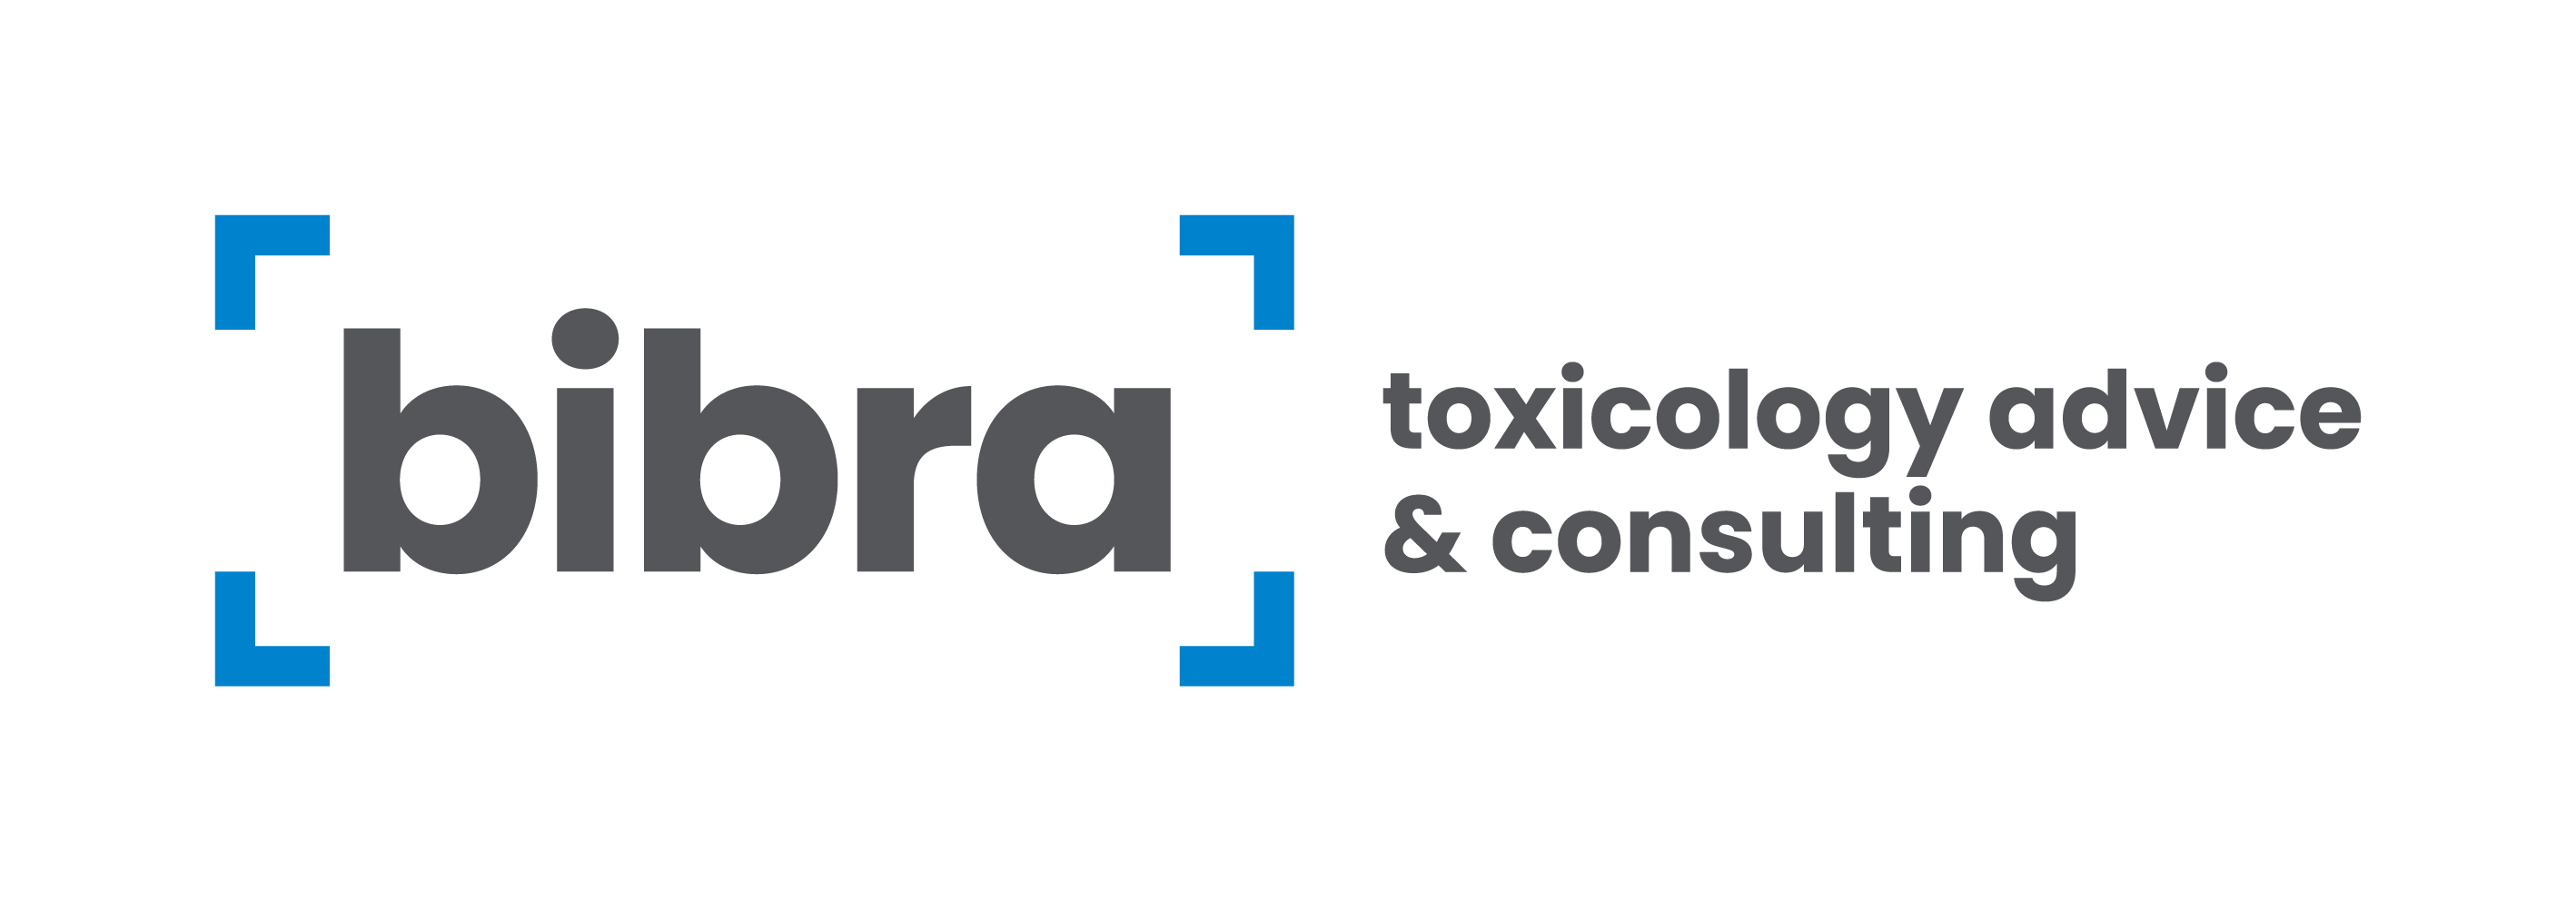 Bibra toxicology advice & consulting